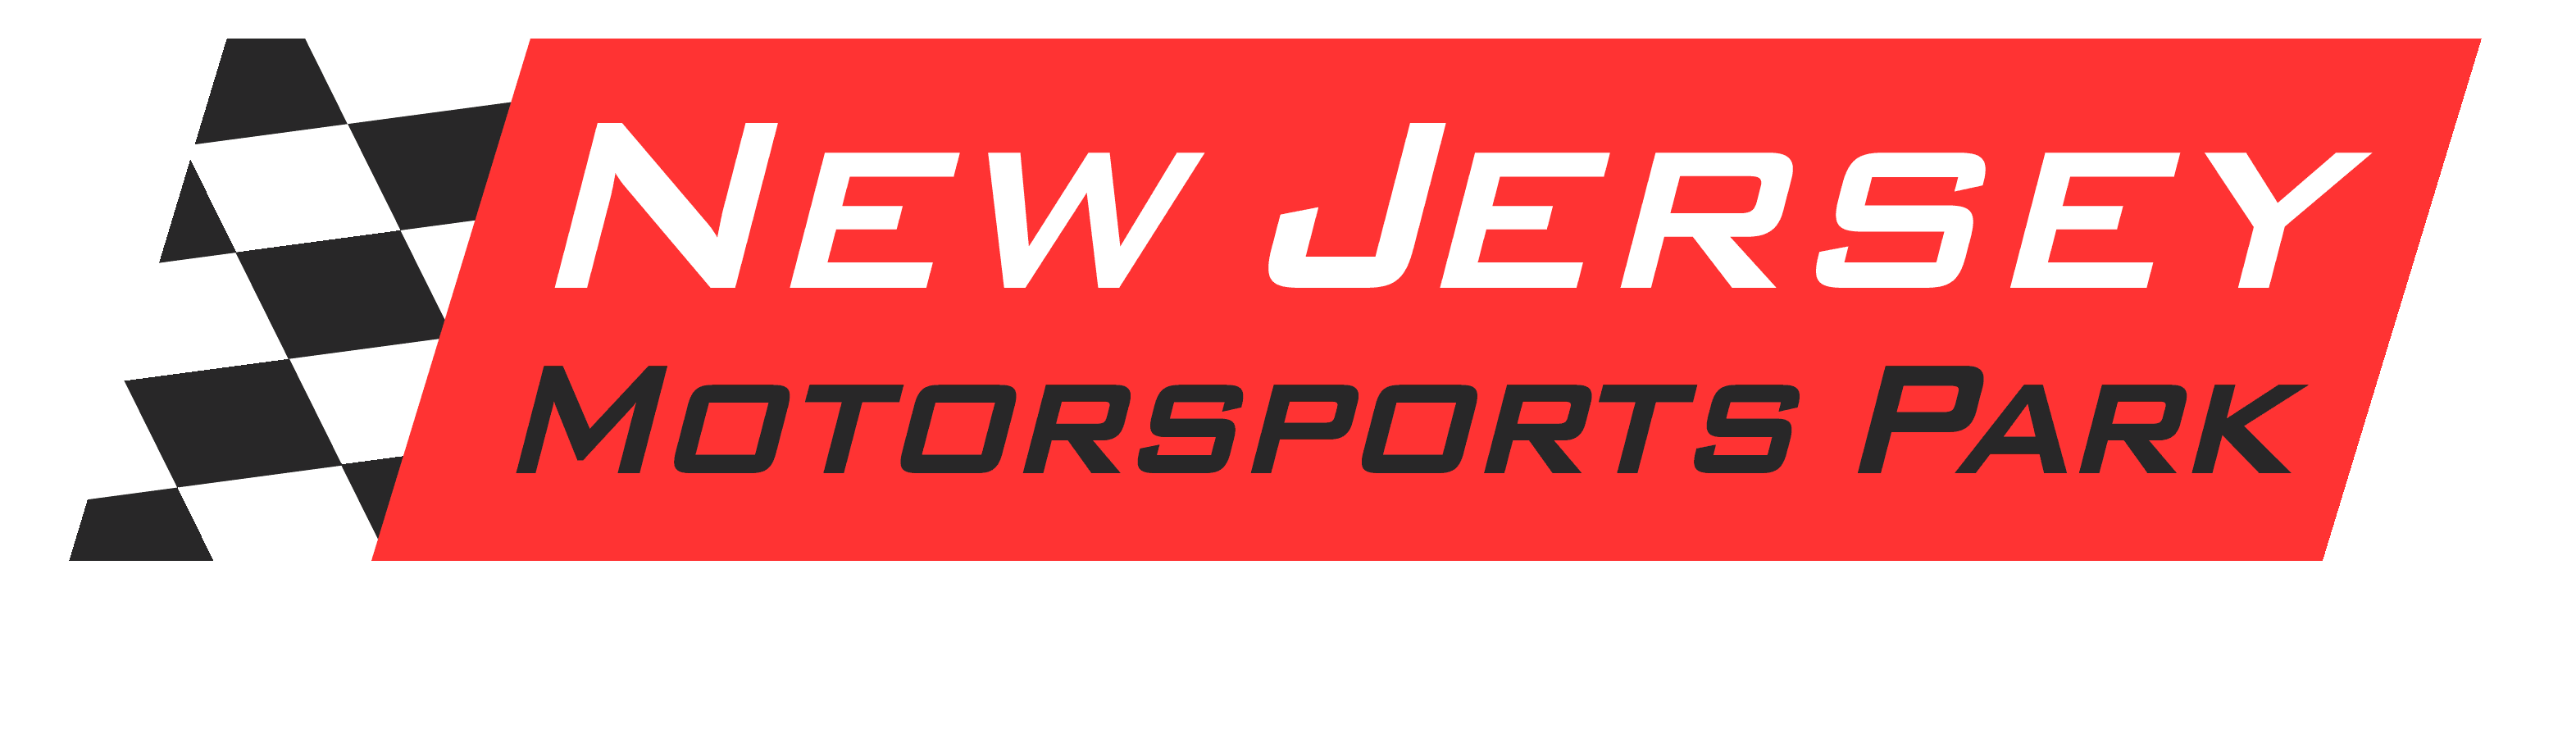 New Jersey Motorsports